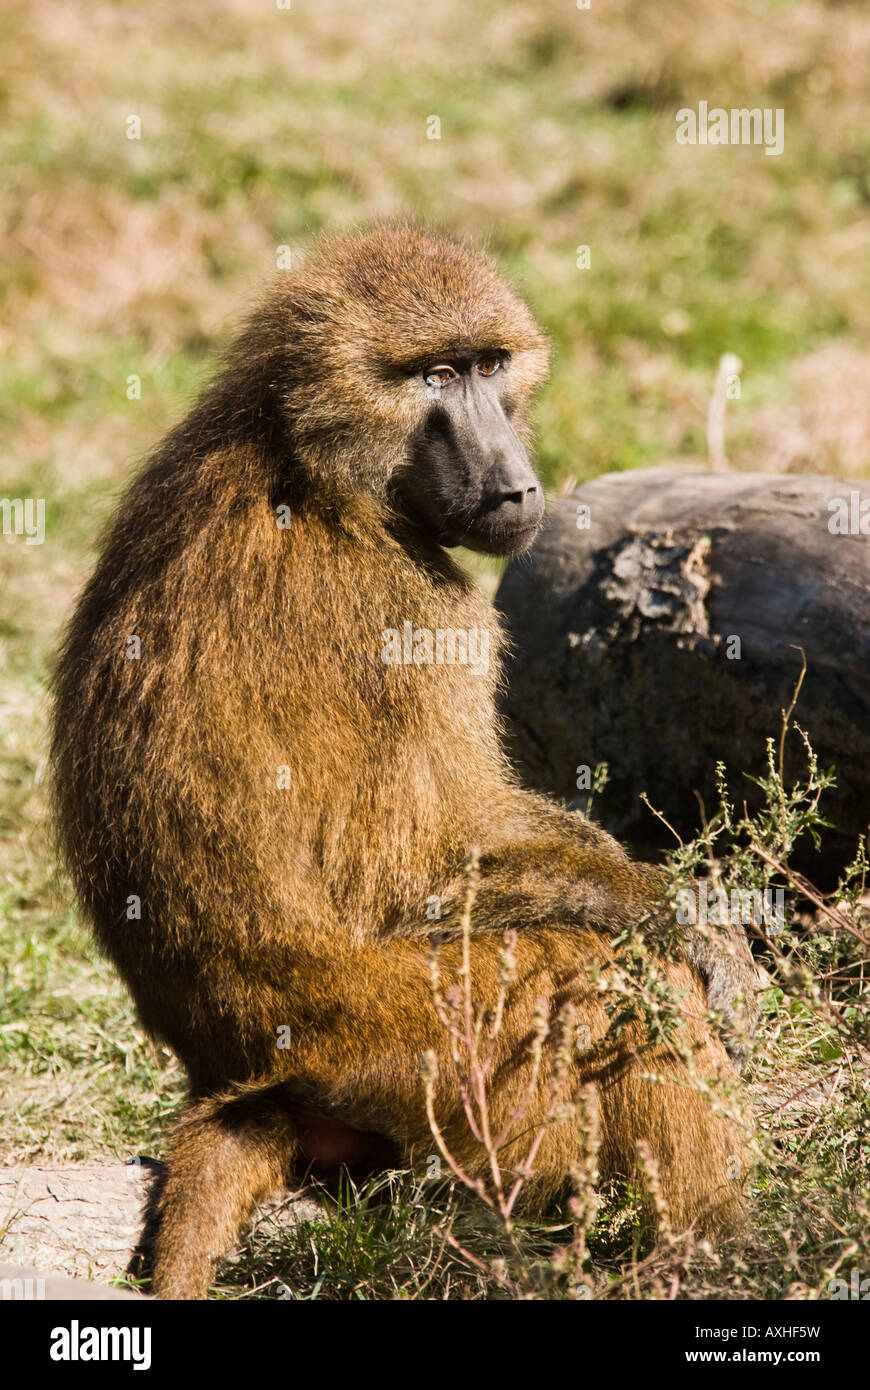 Baboon thinking Stock Photo